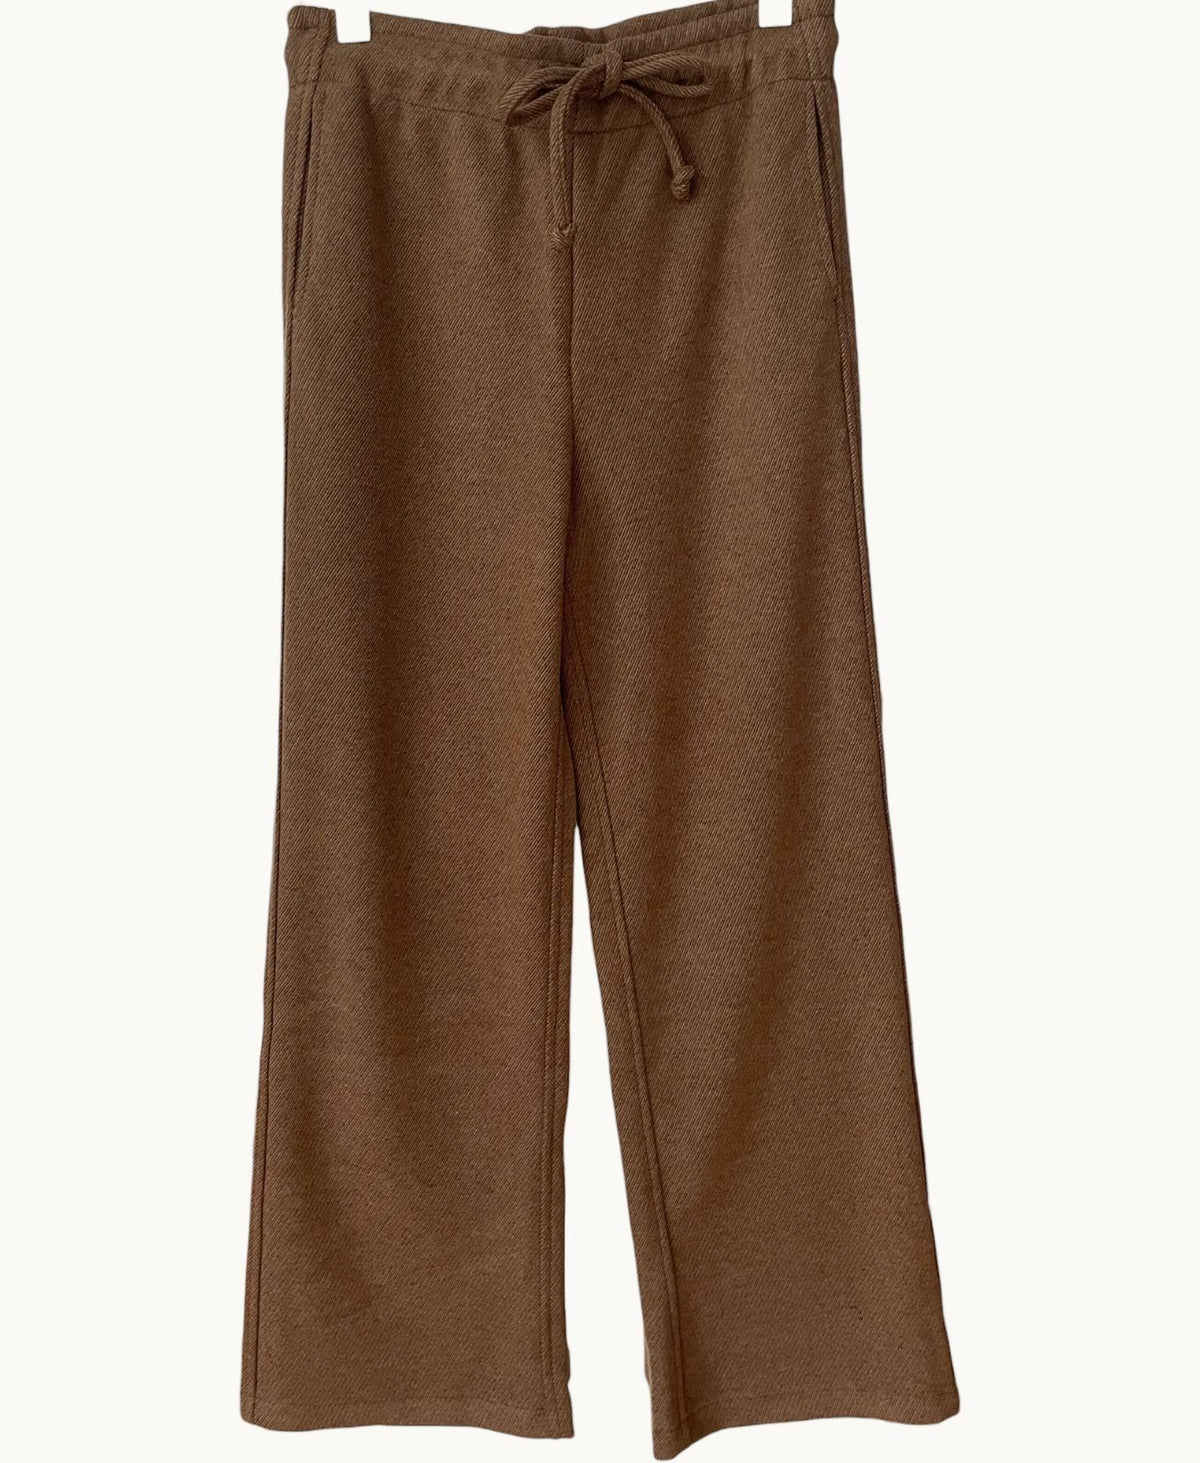 Lora pants - light brown